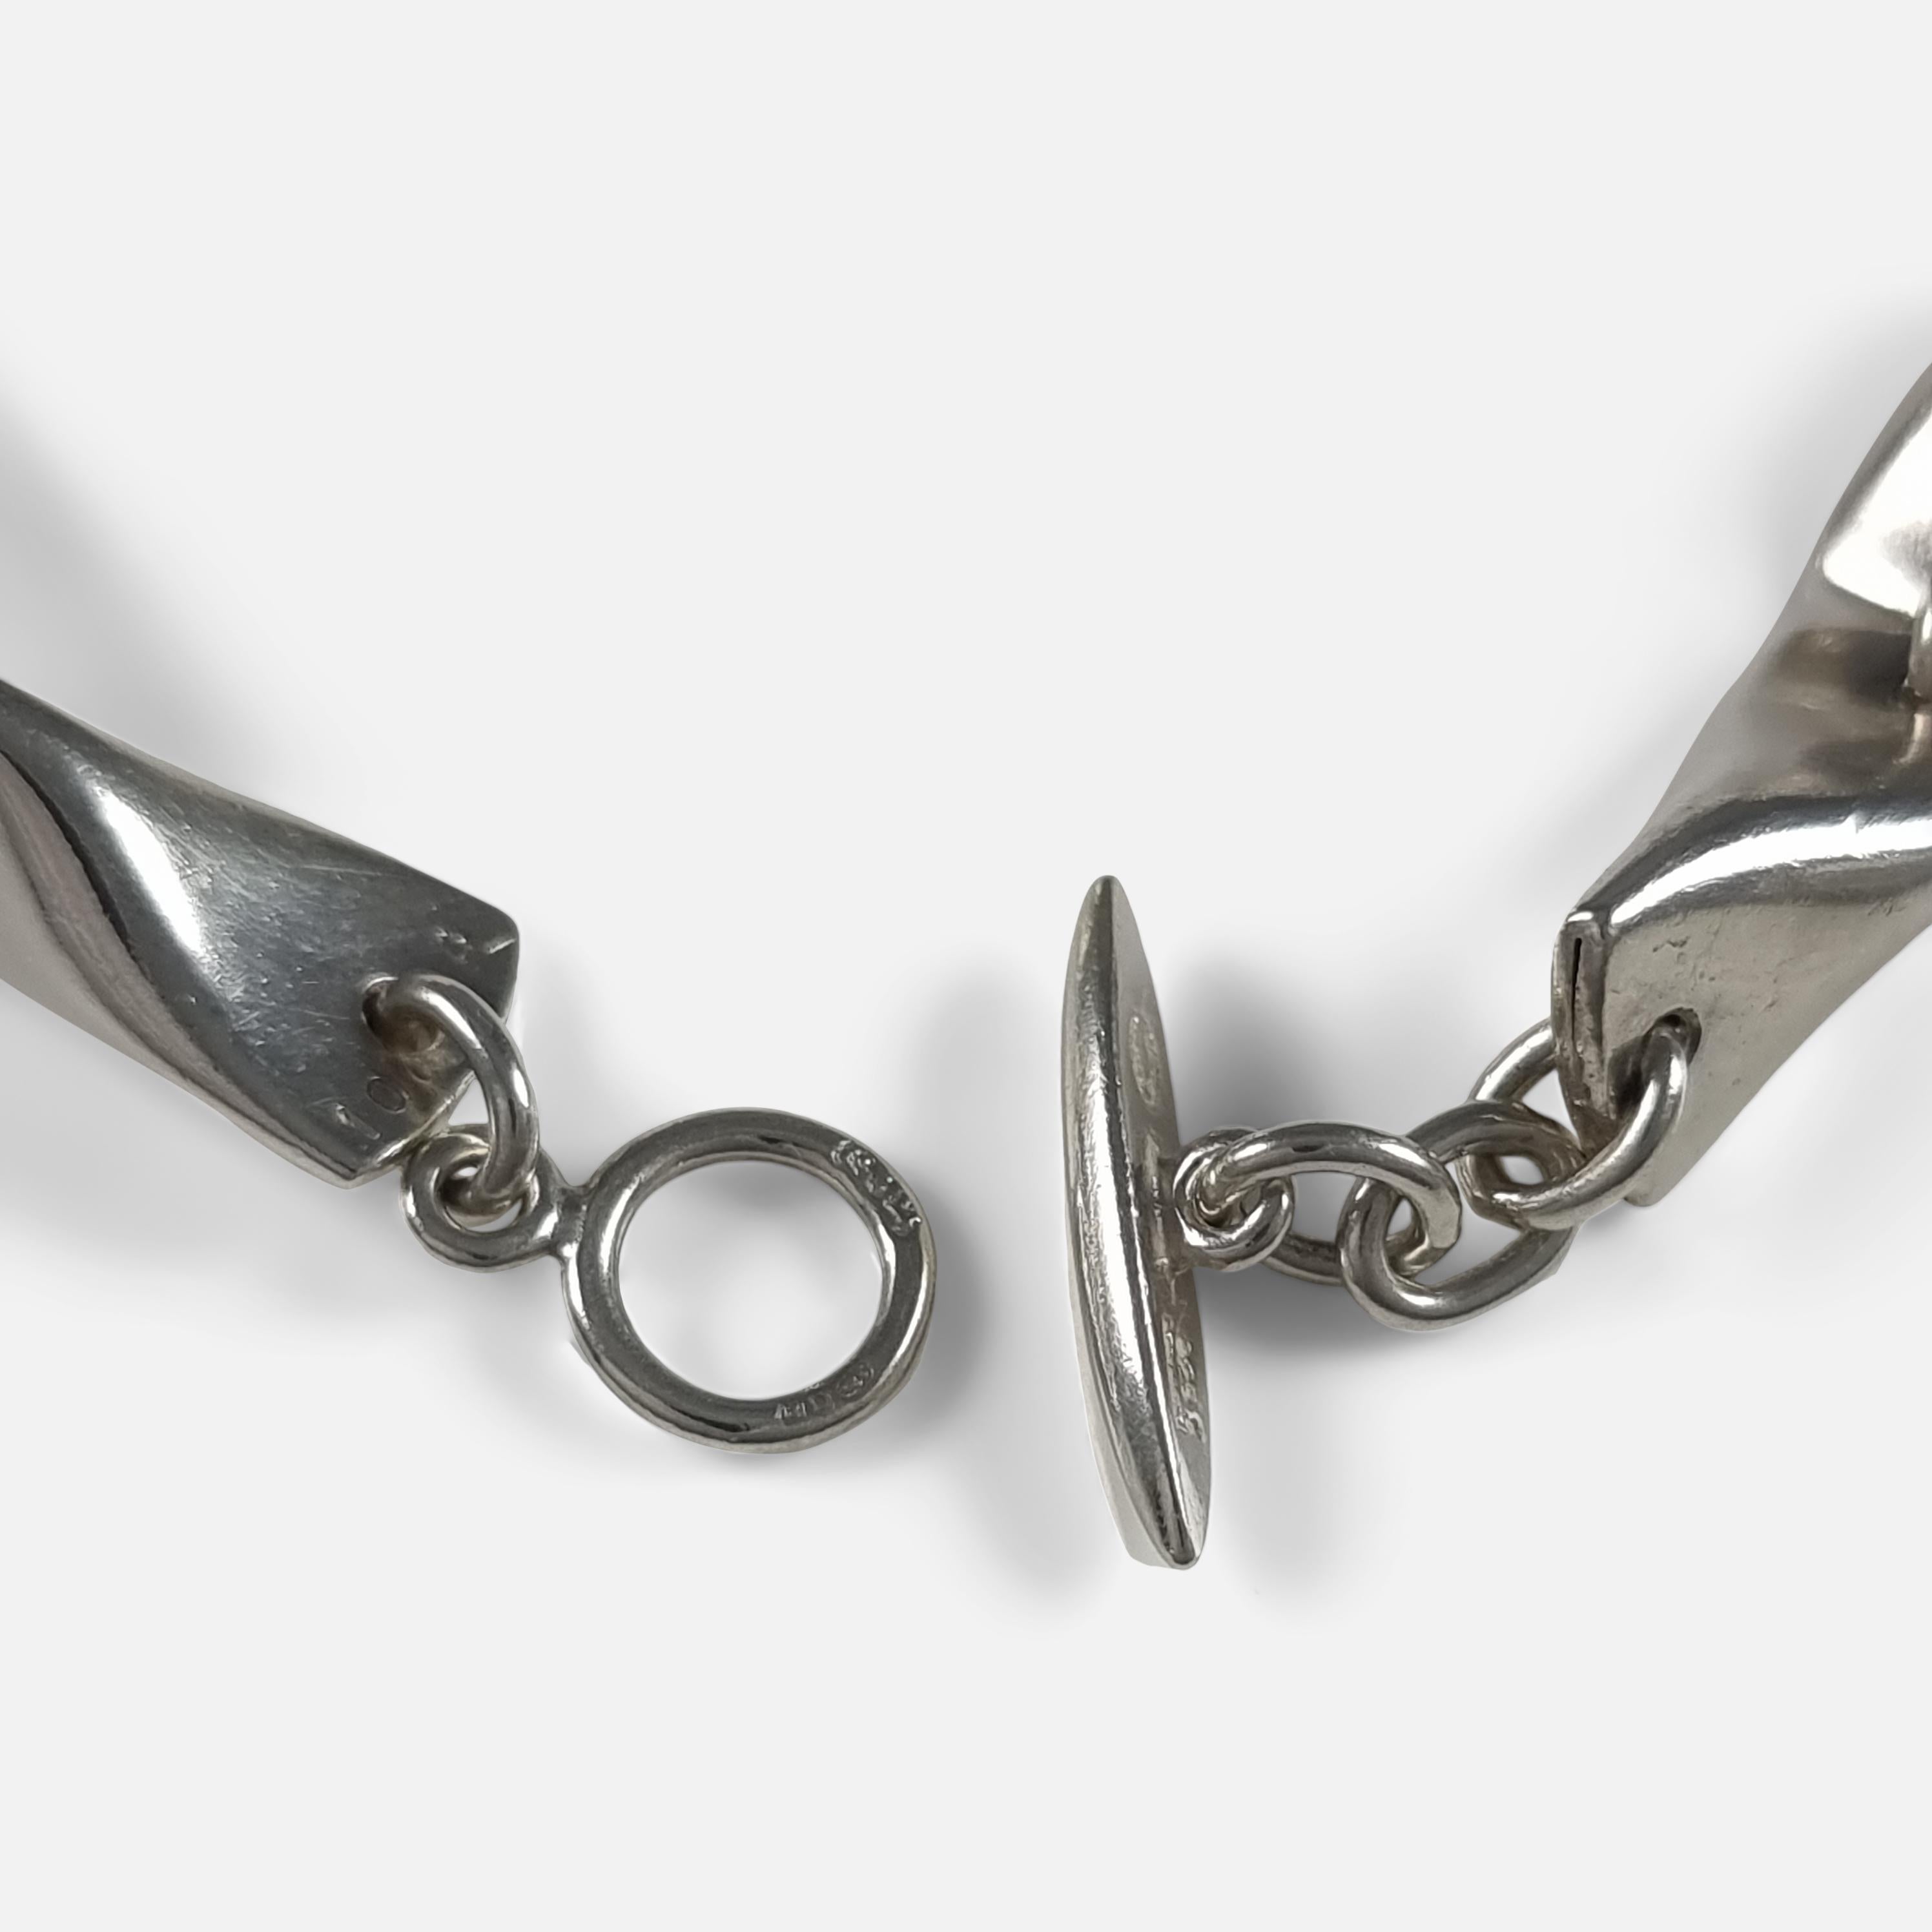 Georg Jensen Silver Butterfly Bracelet #104A, Edvard Kindt-Larsen In Good Condition For Sale In Glasgow, GB